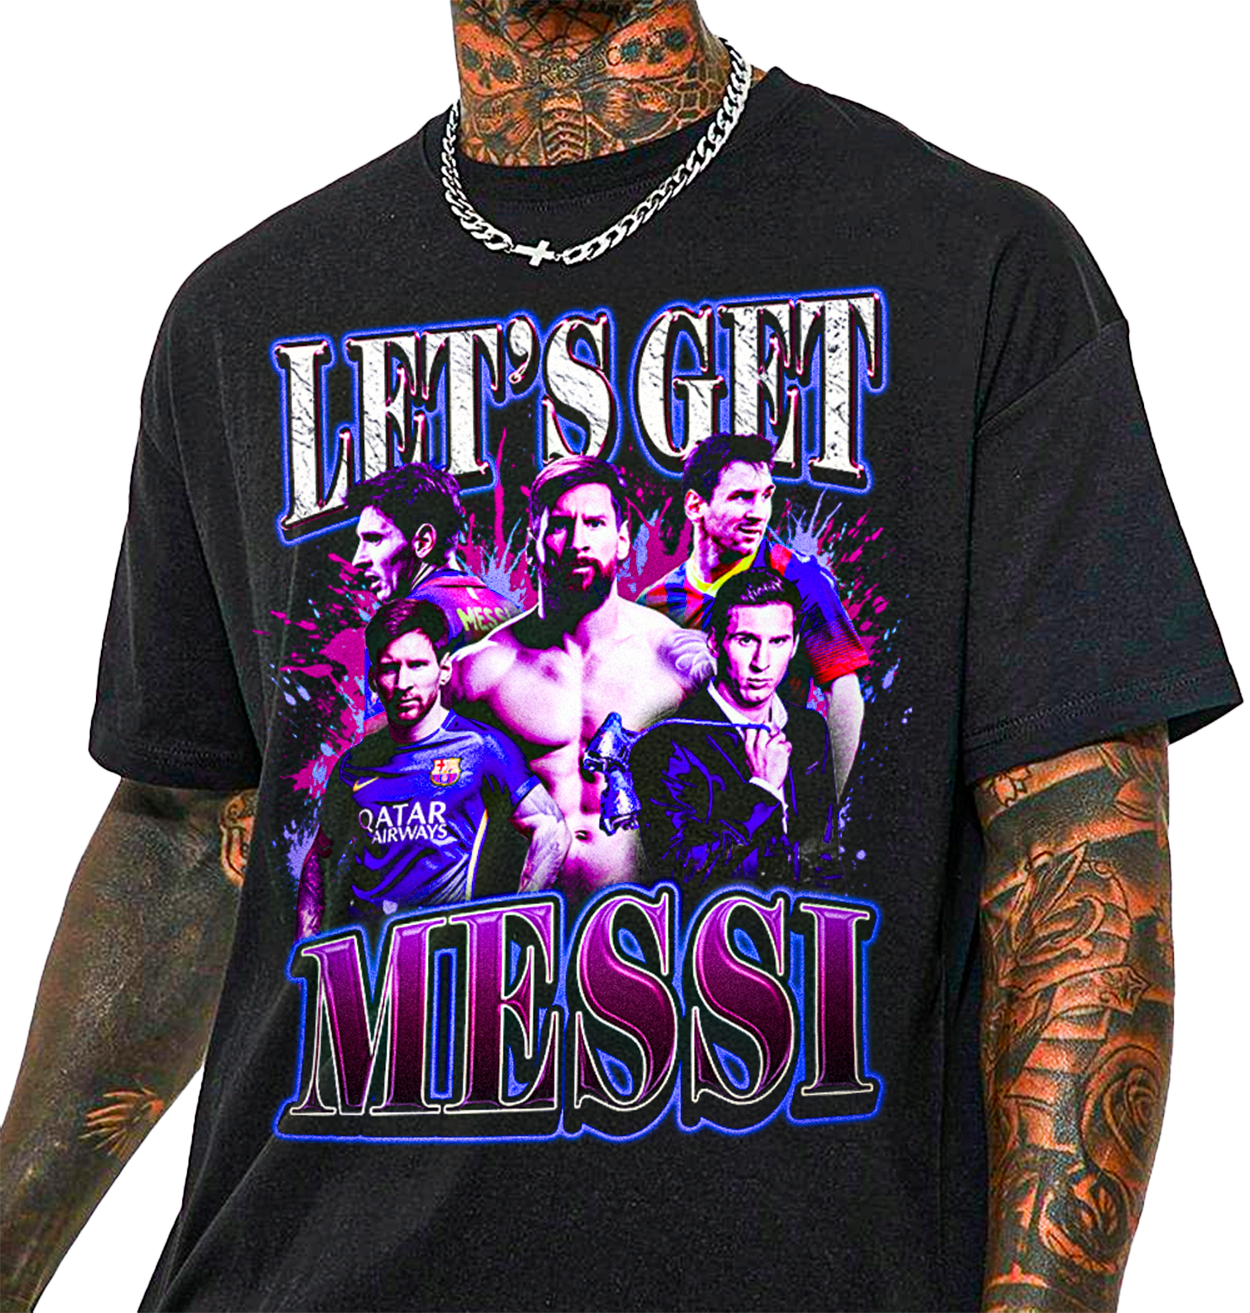 Let's Get Messi T-Shirt!